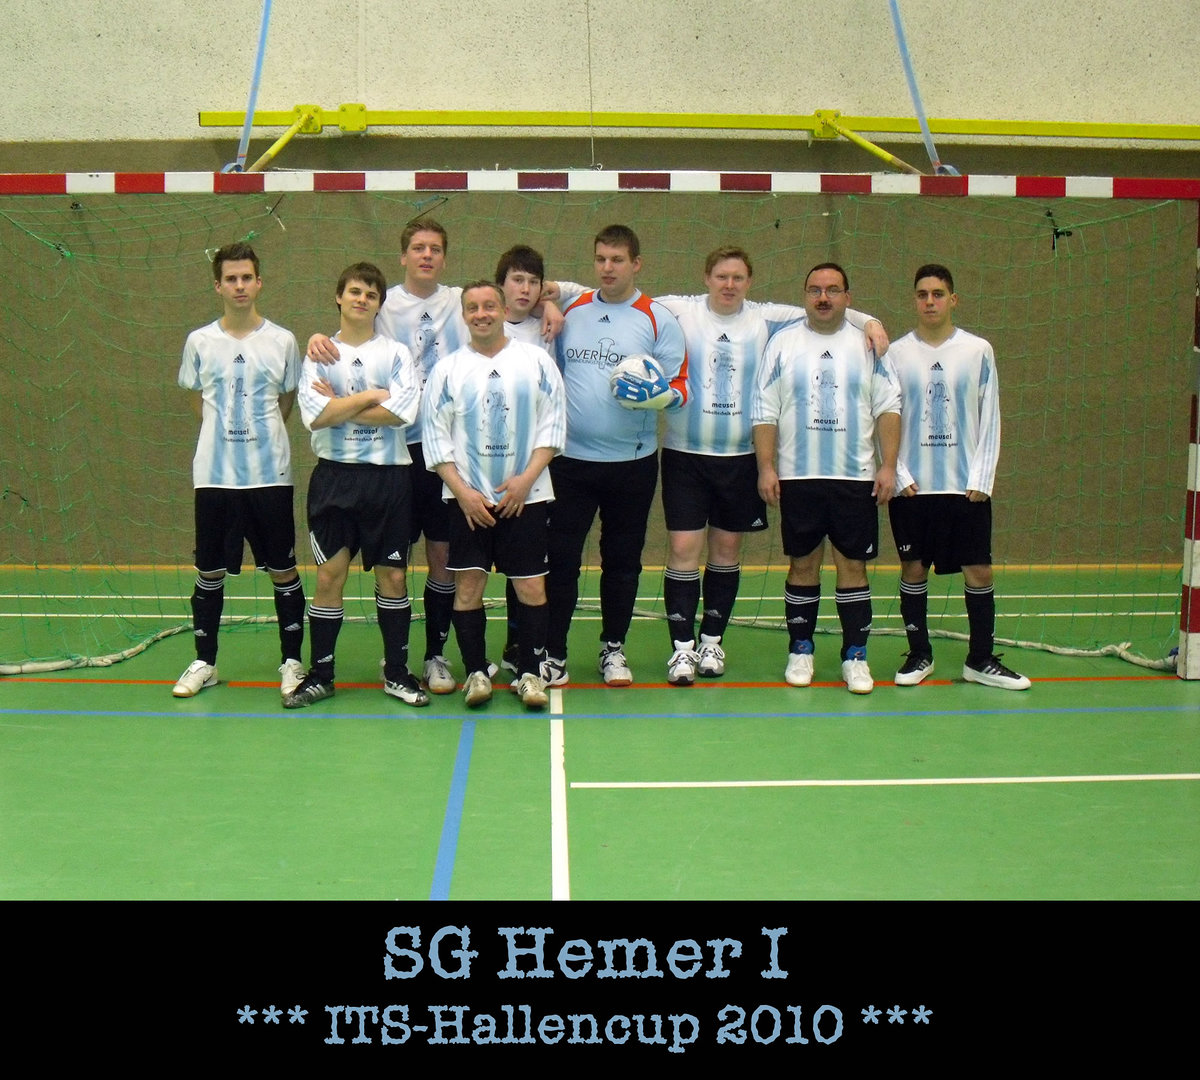 Its hallencup 2010   teamfotos   sg hemer i retina